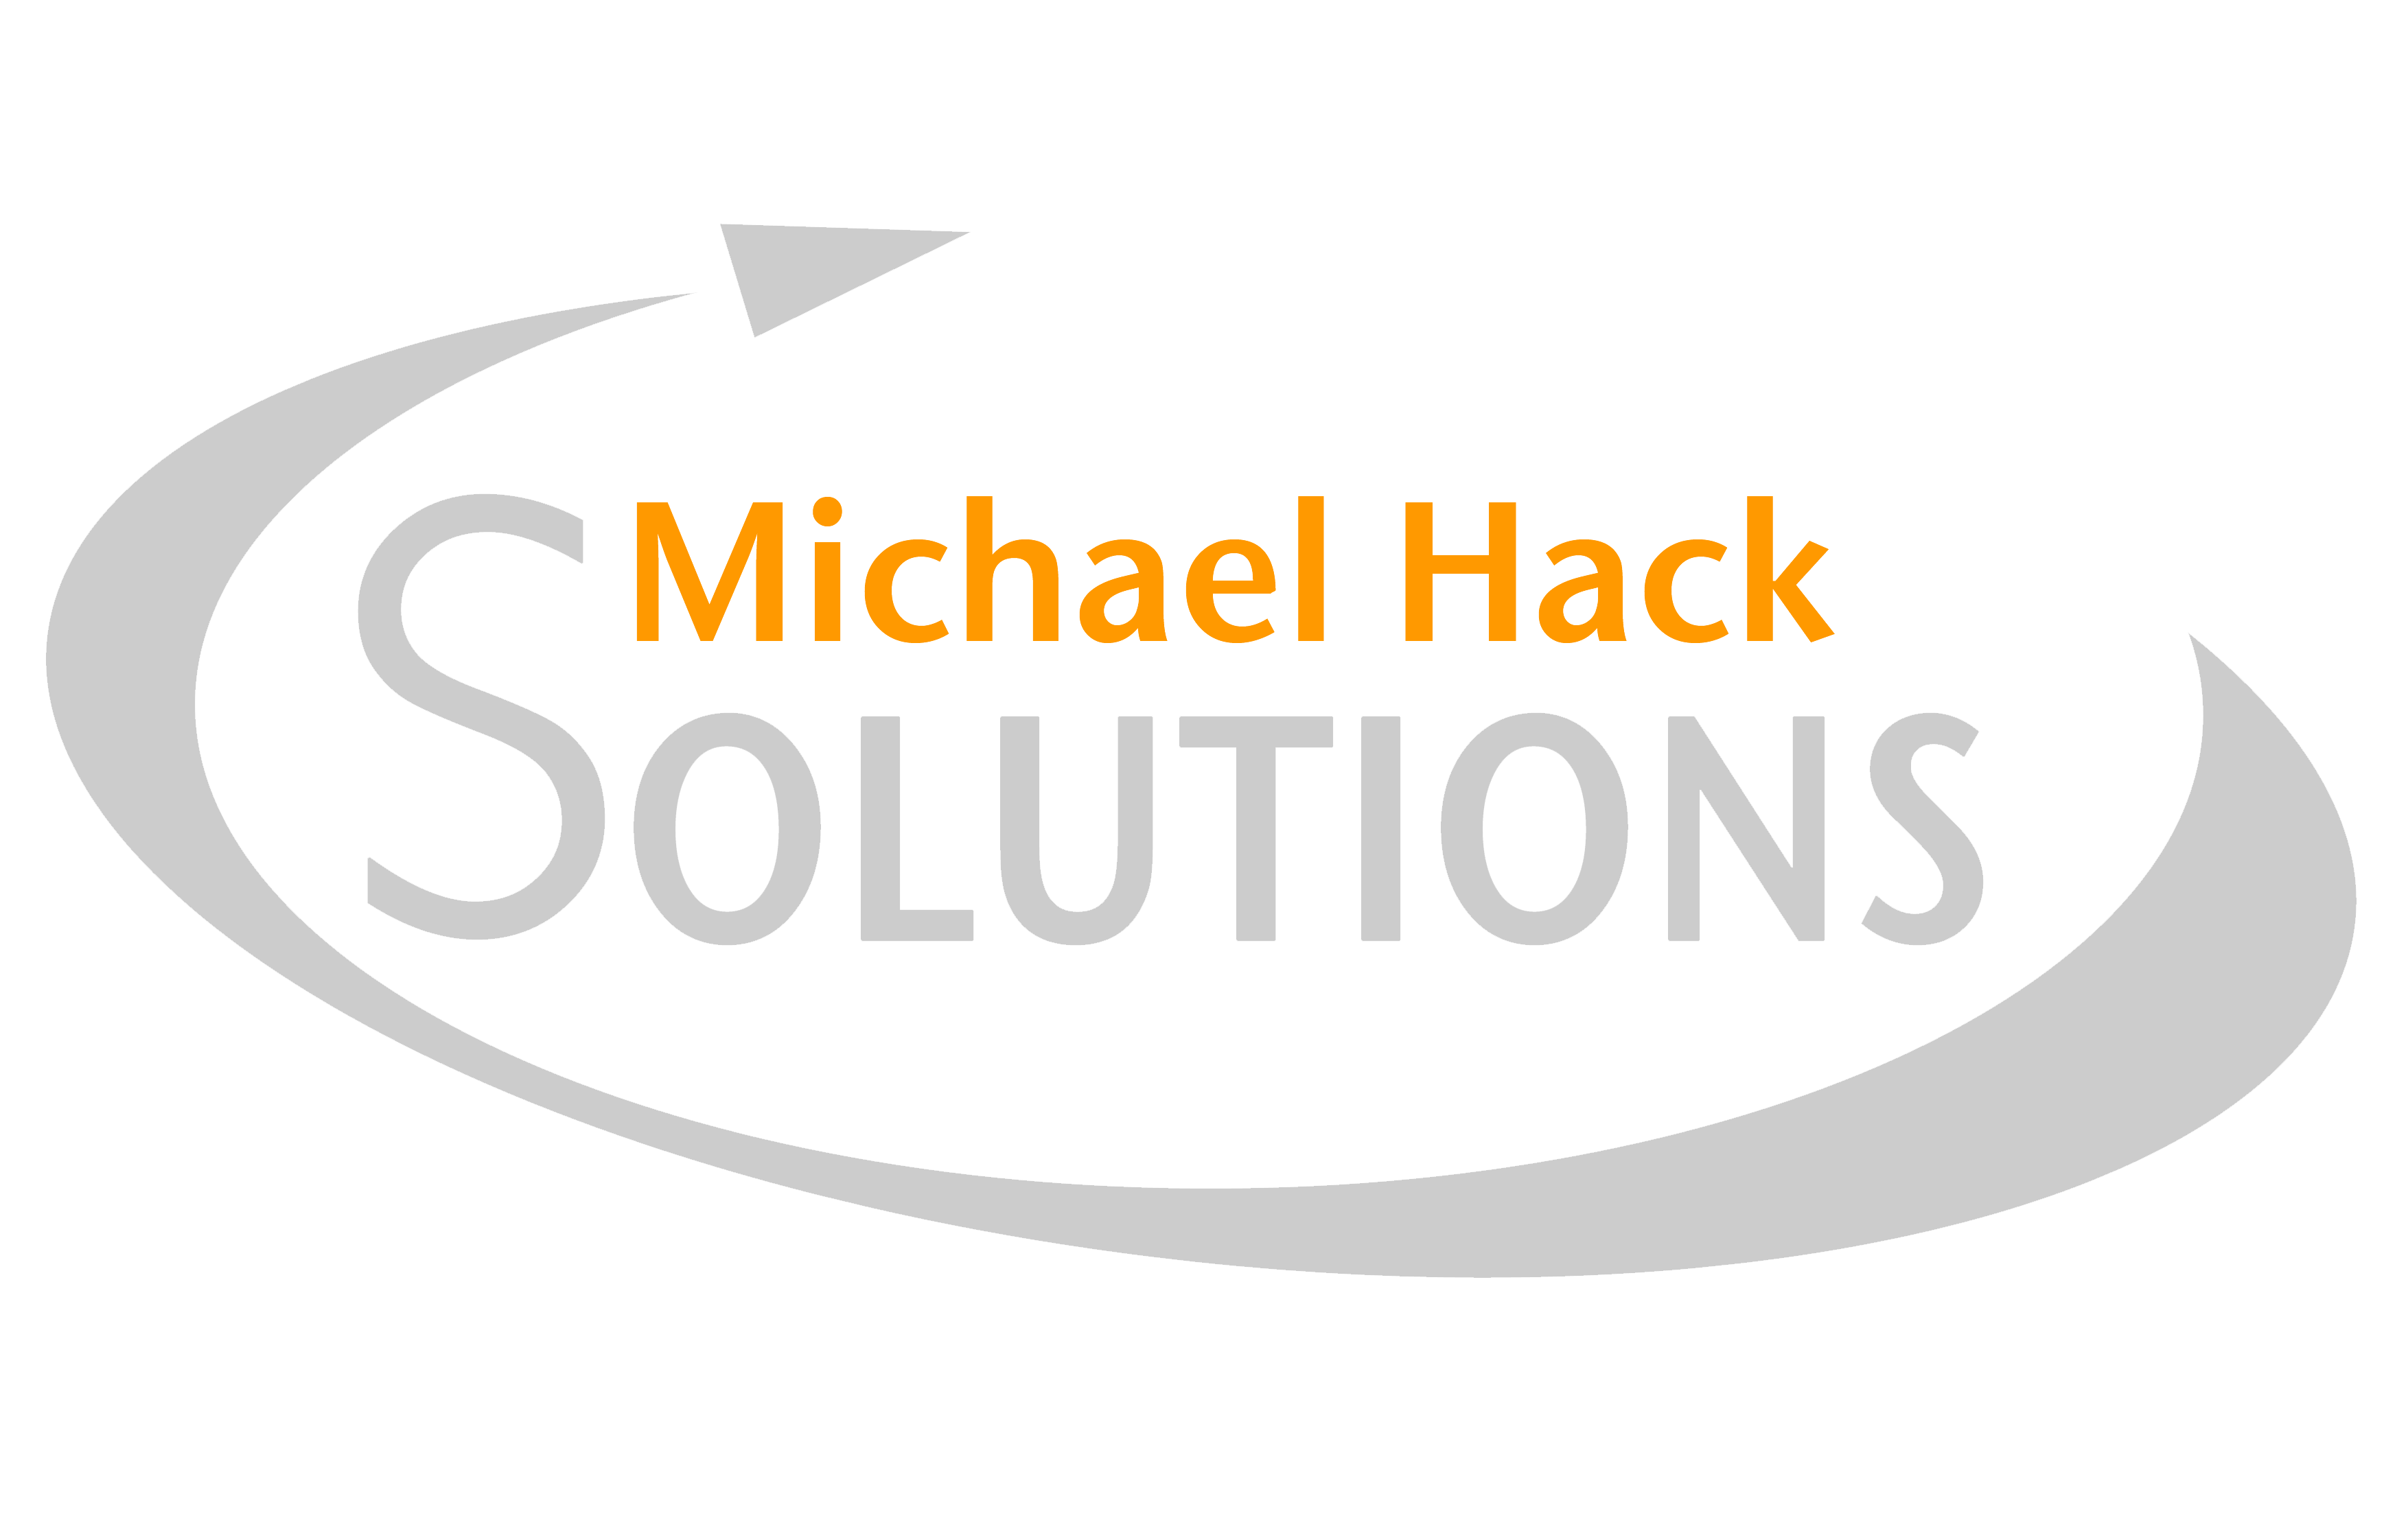 Michael Hack Solutions